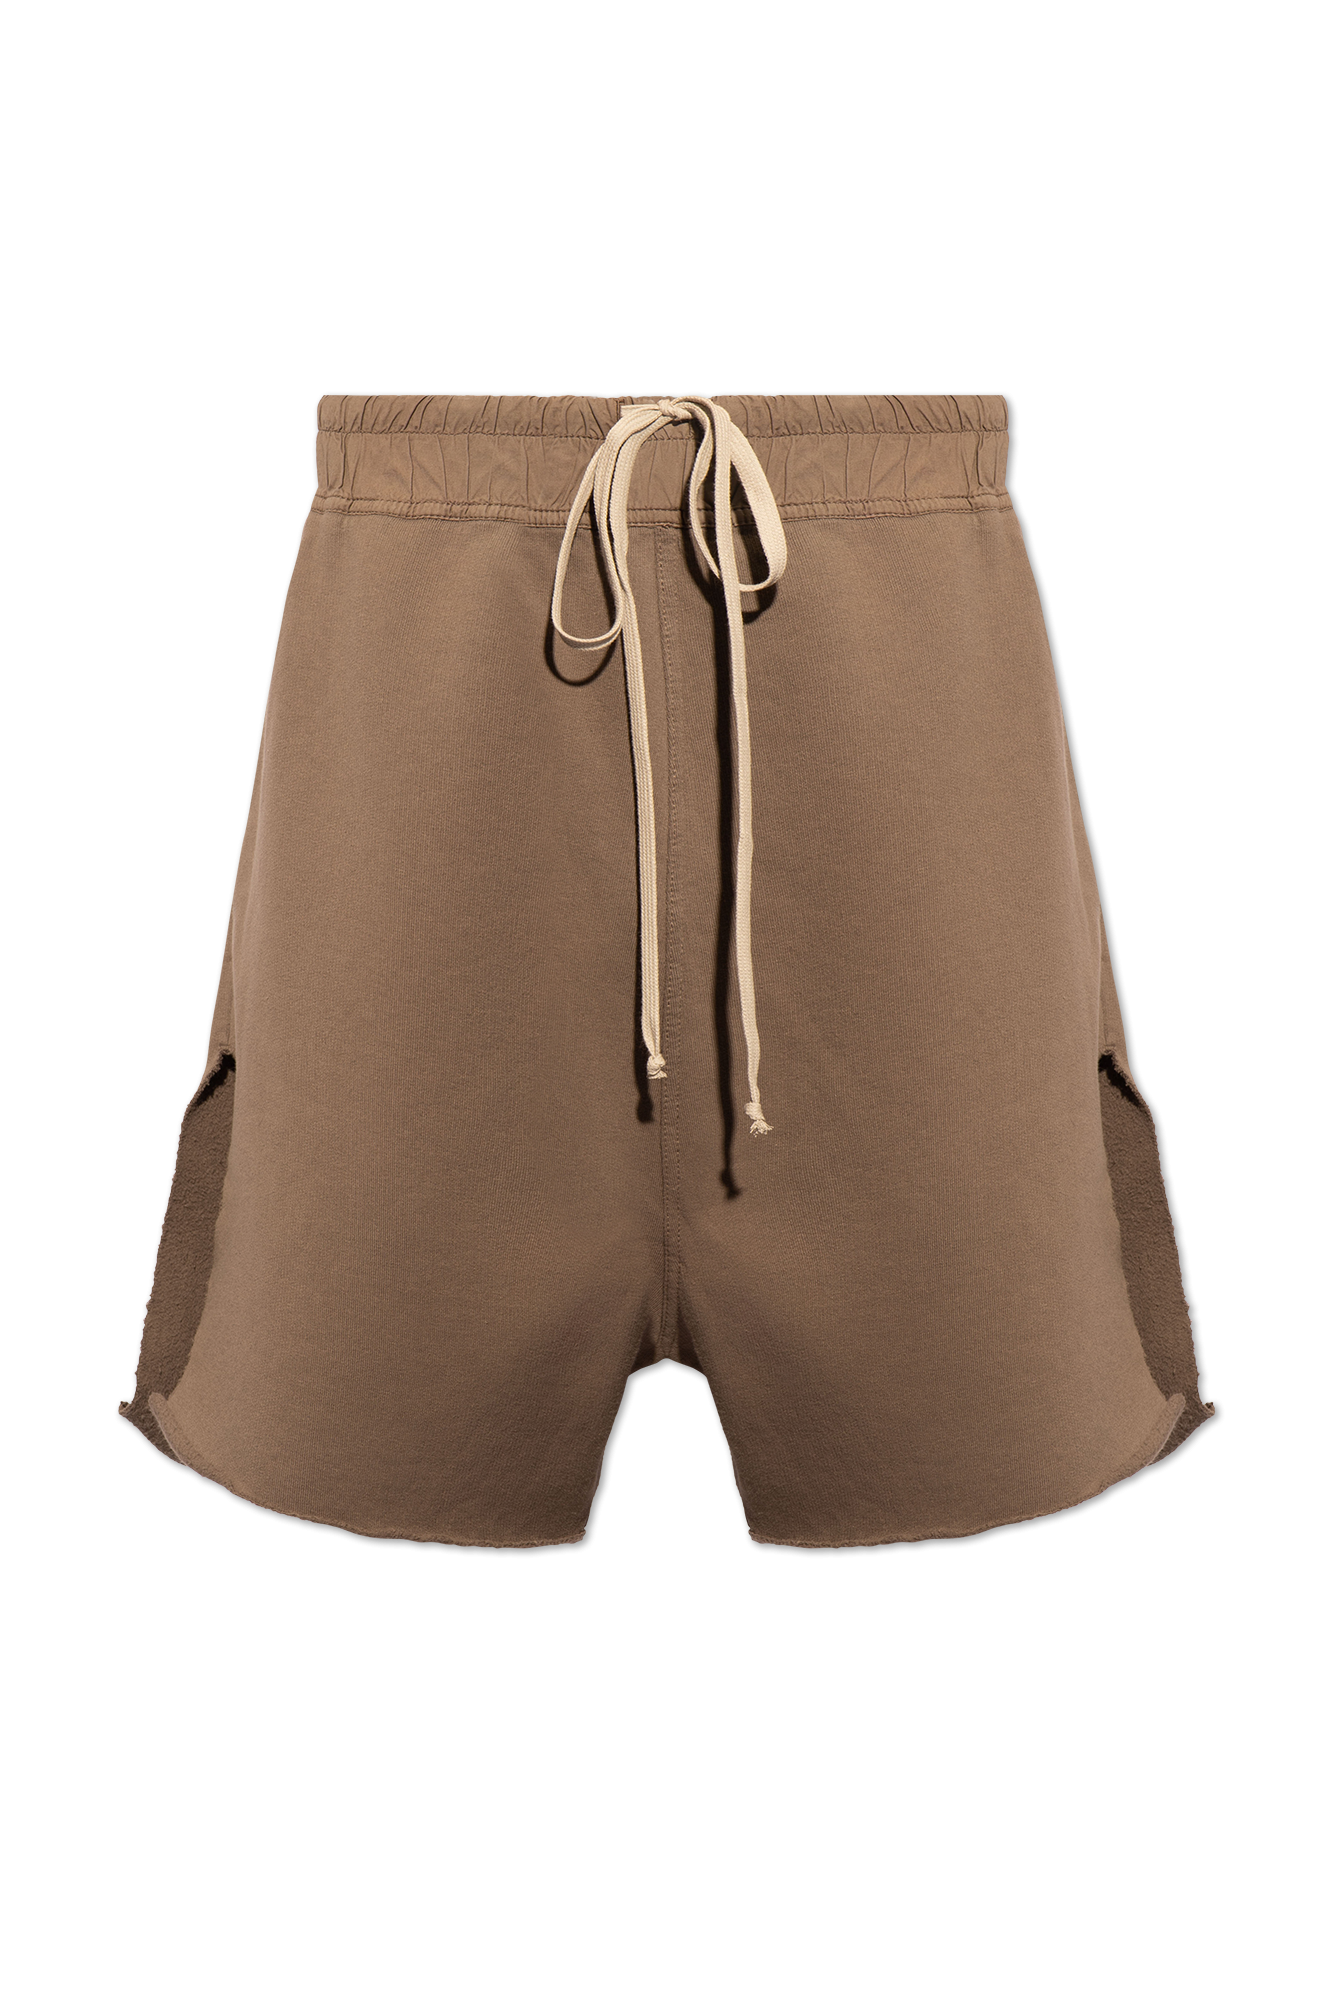 Rick Owens DRKSHDW 'Long Boxers' shorts, Men's Clothing